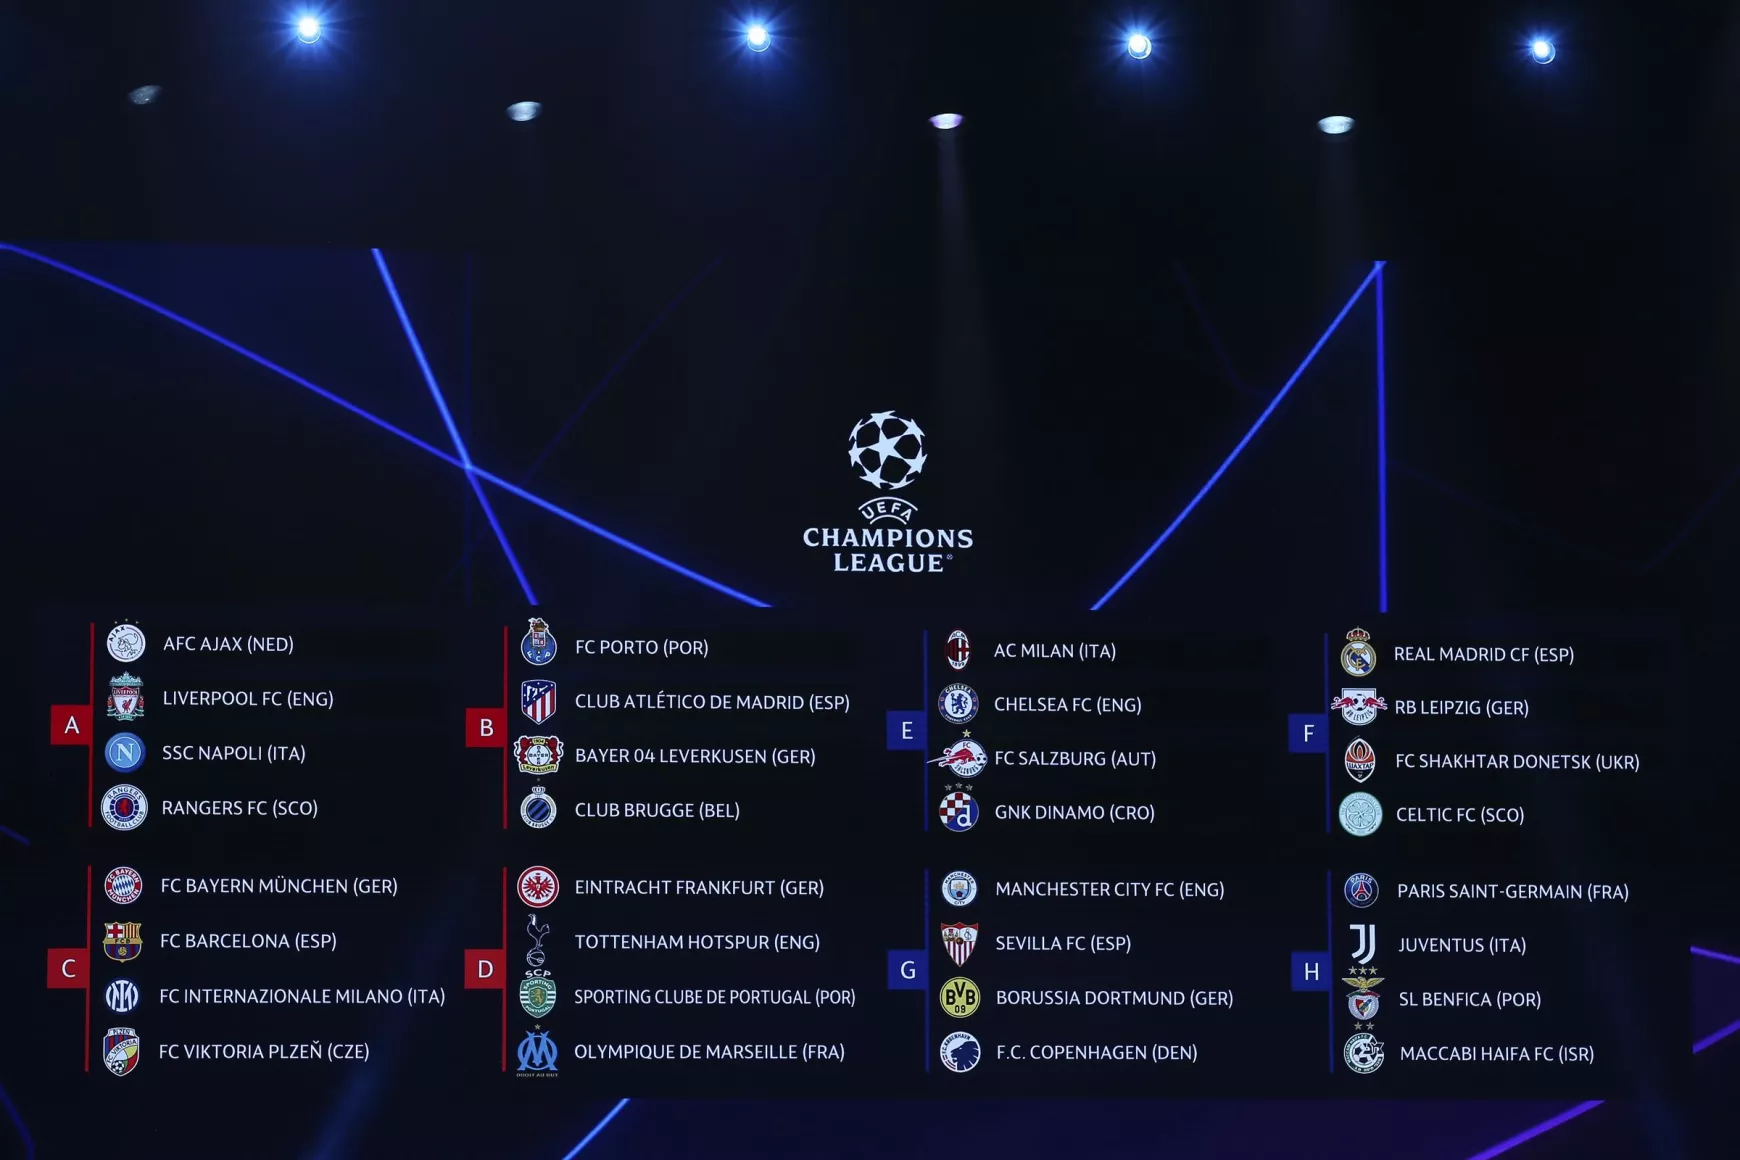 Bajnokok Ligája 2022 - csoportok